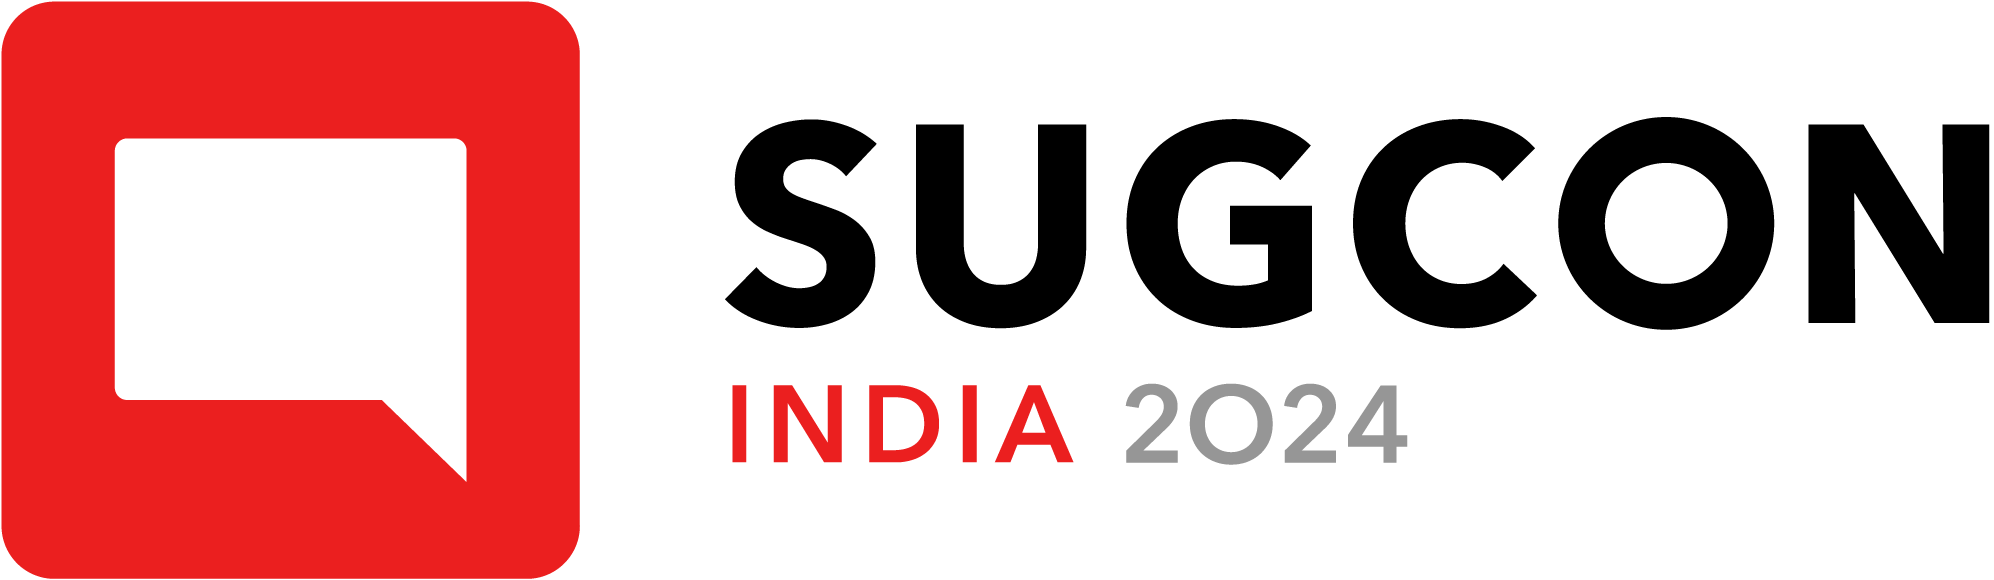 SUGCON India 2024 Logo